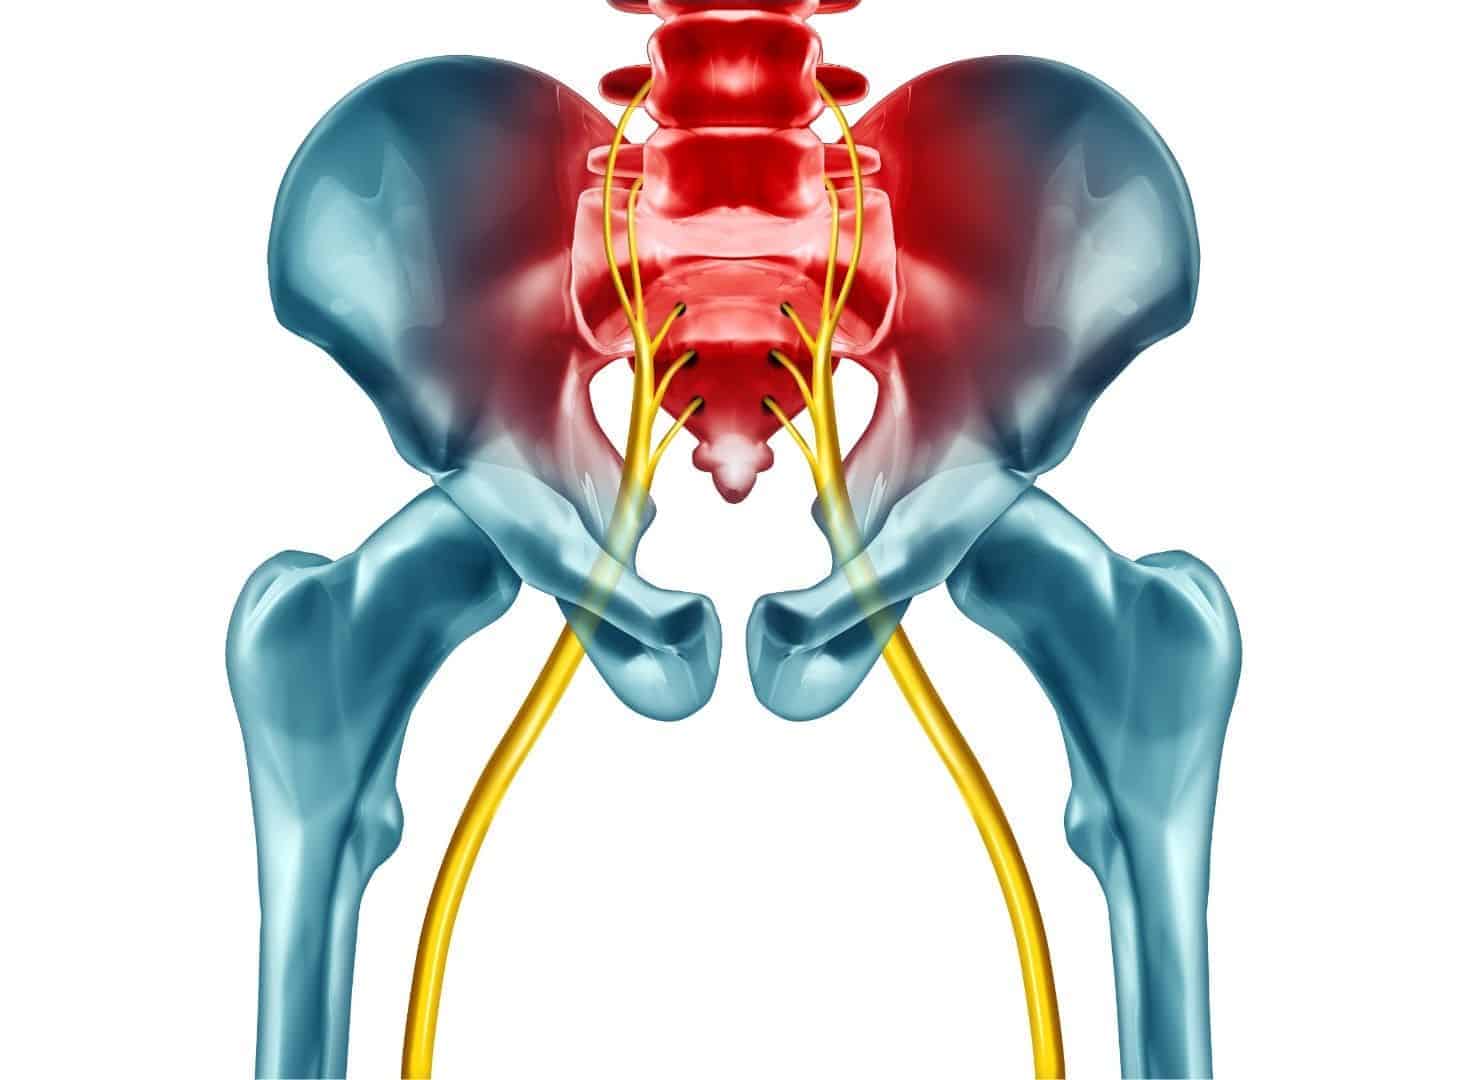 https://pttimewithtim.com/wp-content/uploads/2021/03/Sciatic-Nerve-Anatomy.jpg